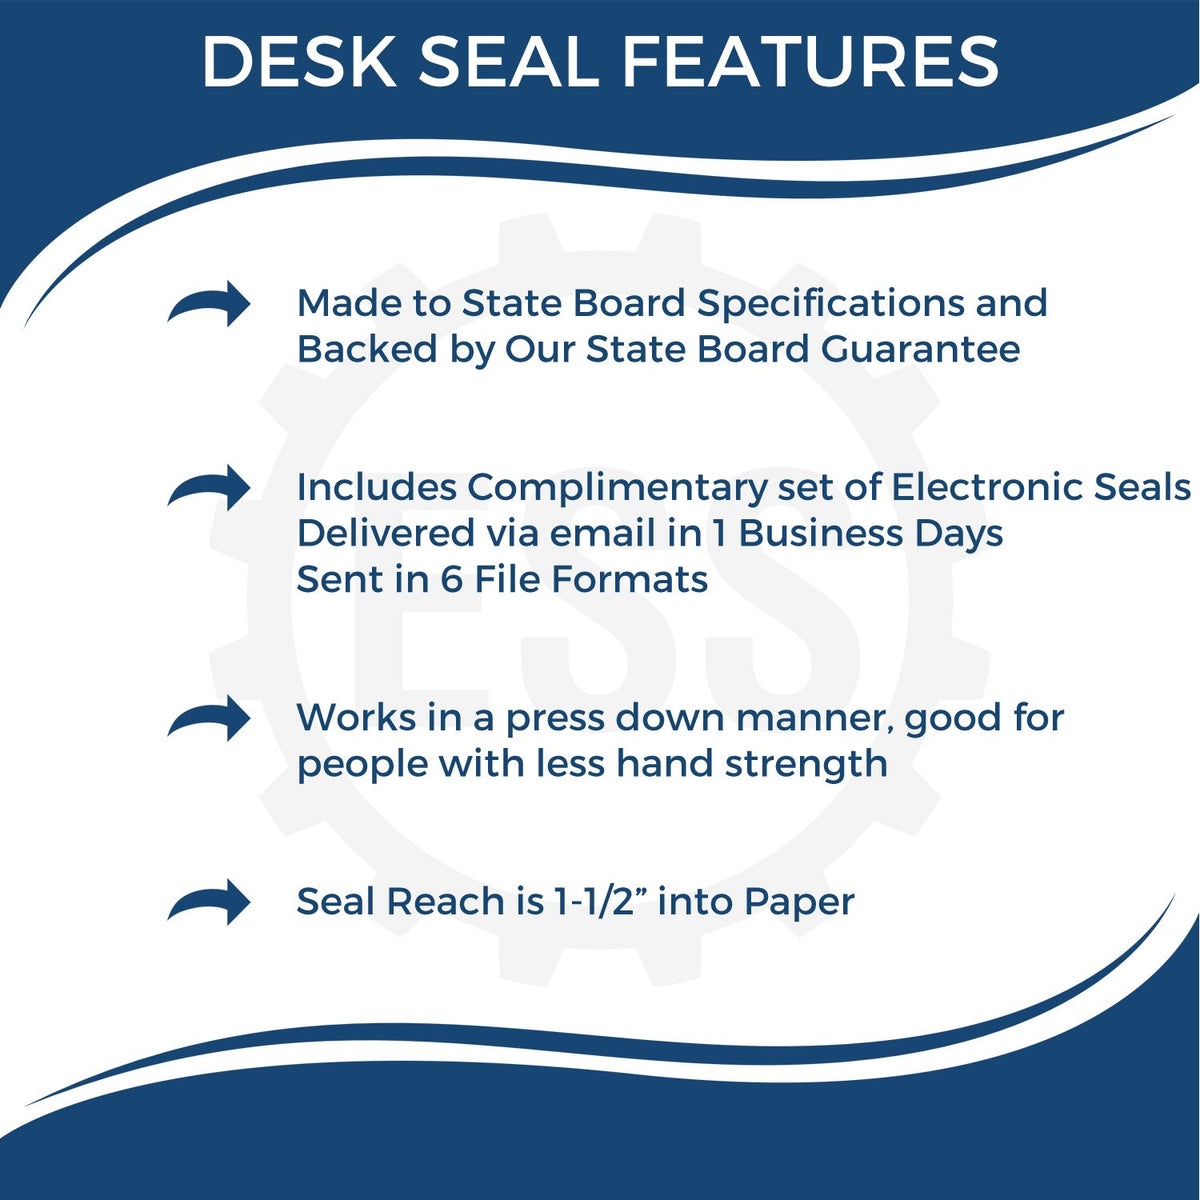 North Carolina Engineer Desk Seal